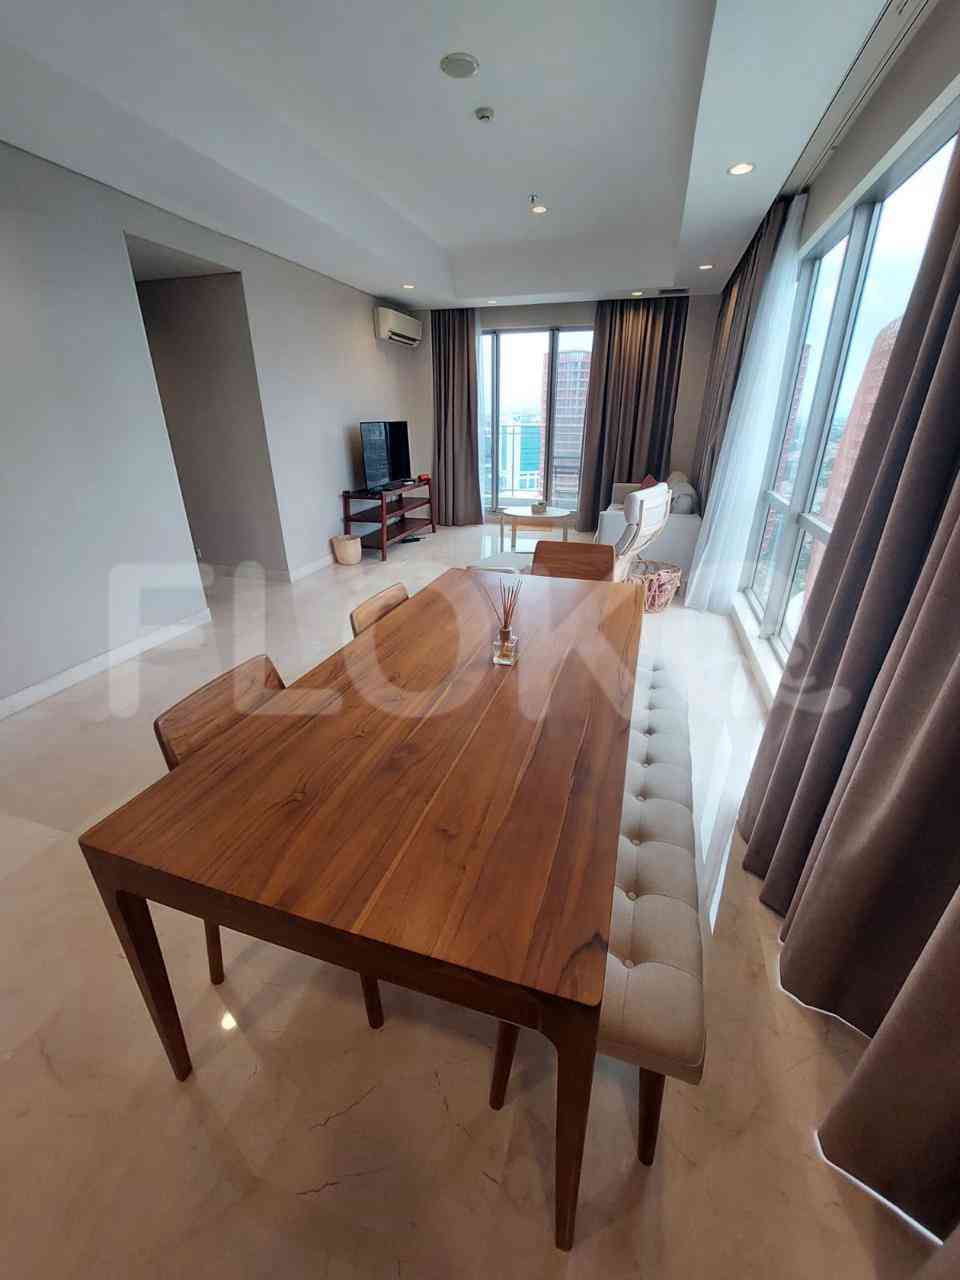 3 Bedroom on 15th Floor for Rent in Apartemen Branz Simatupang - ftb8f9 5